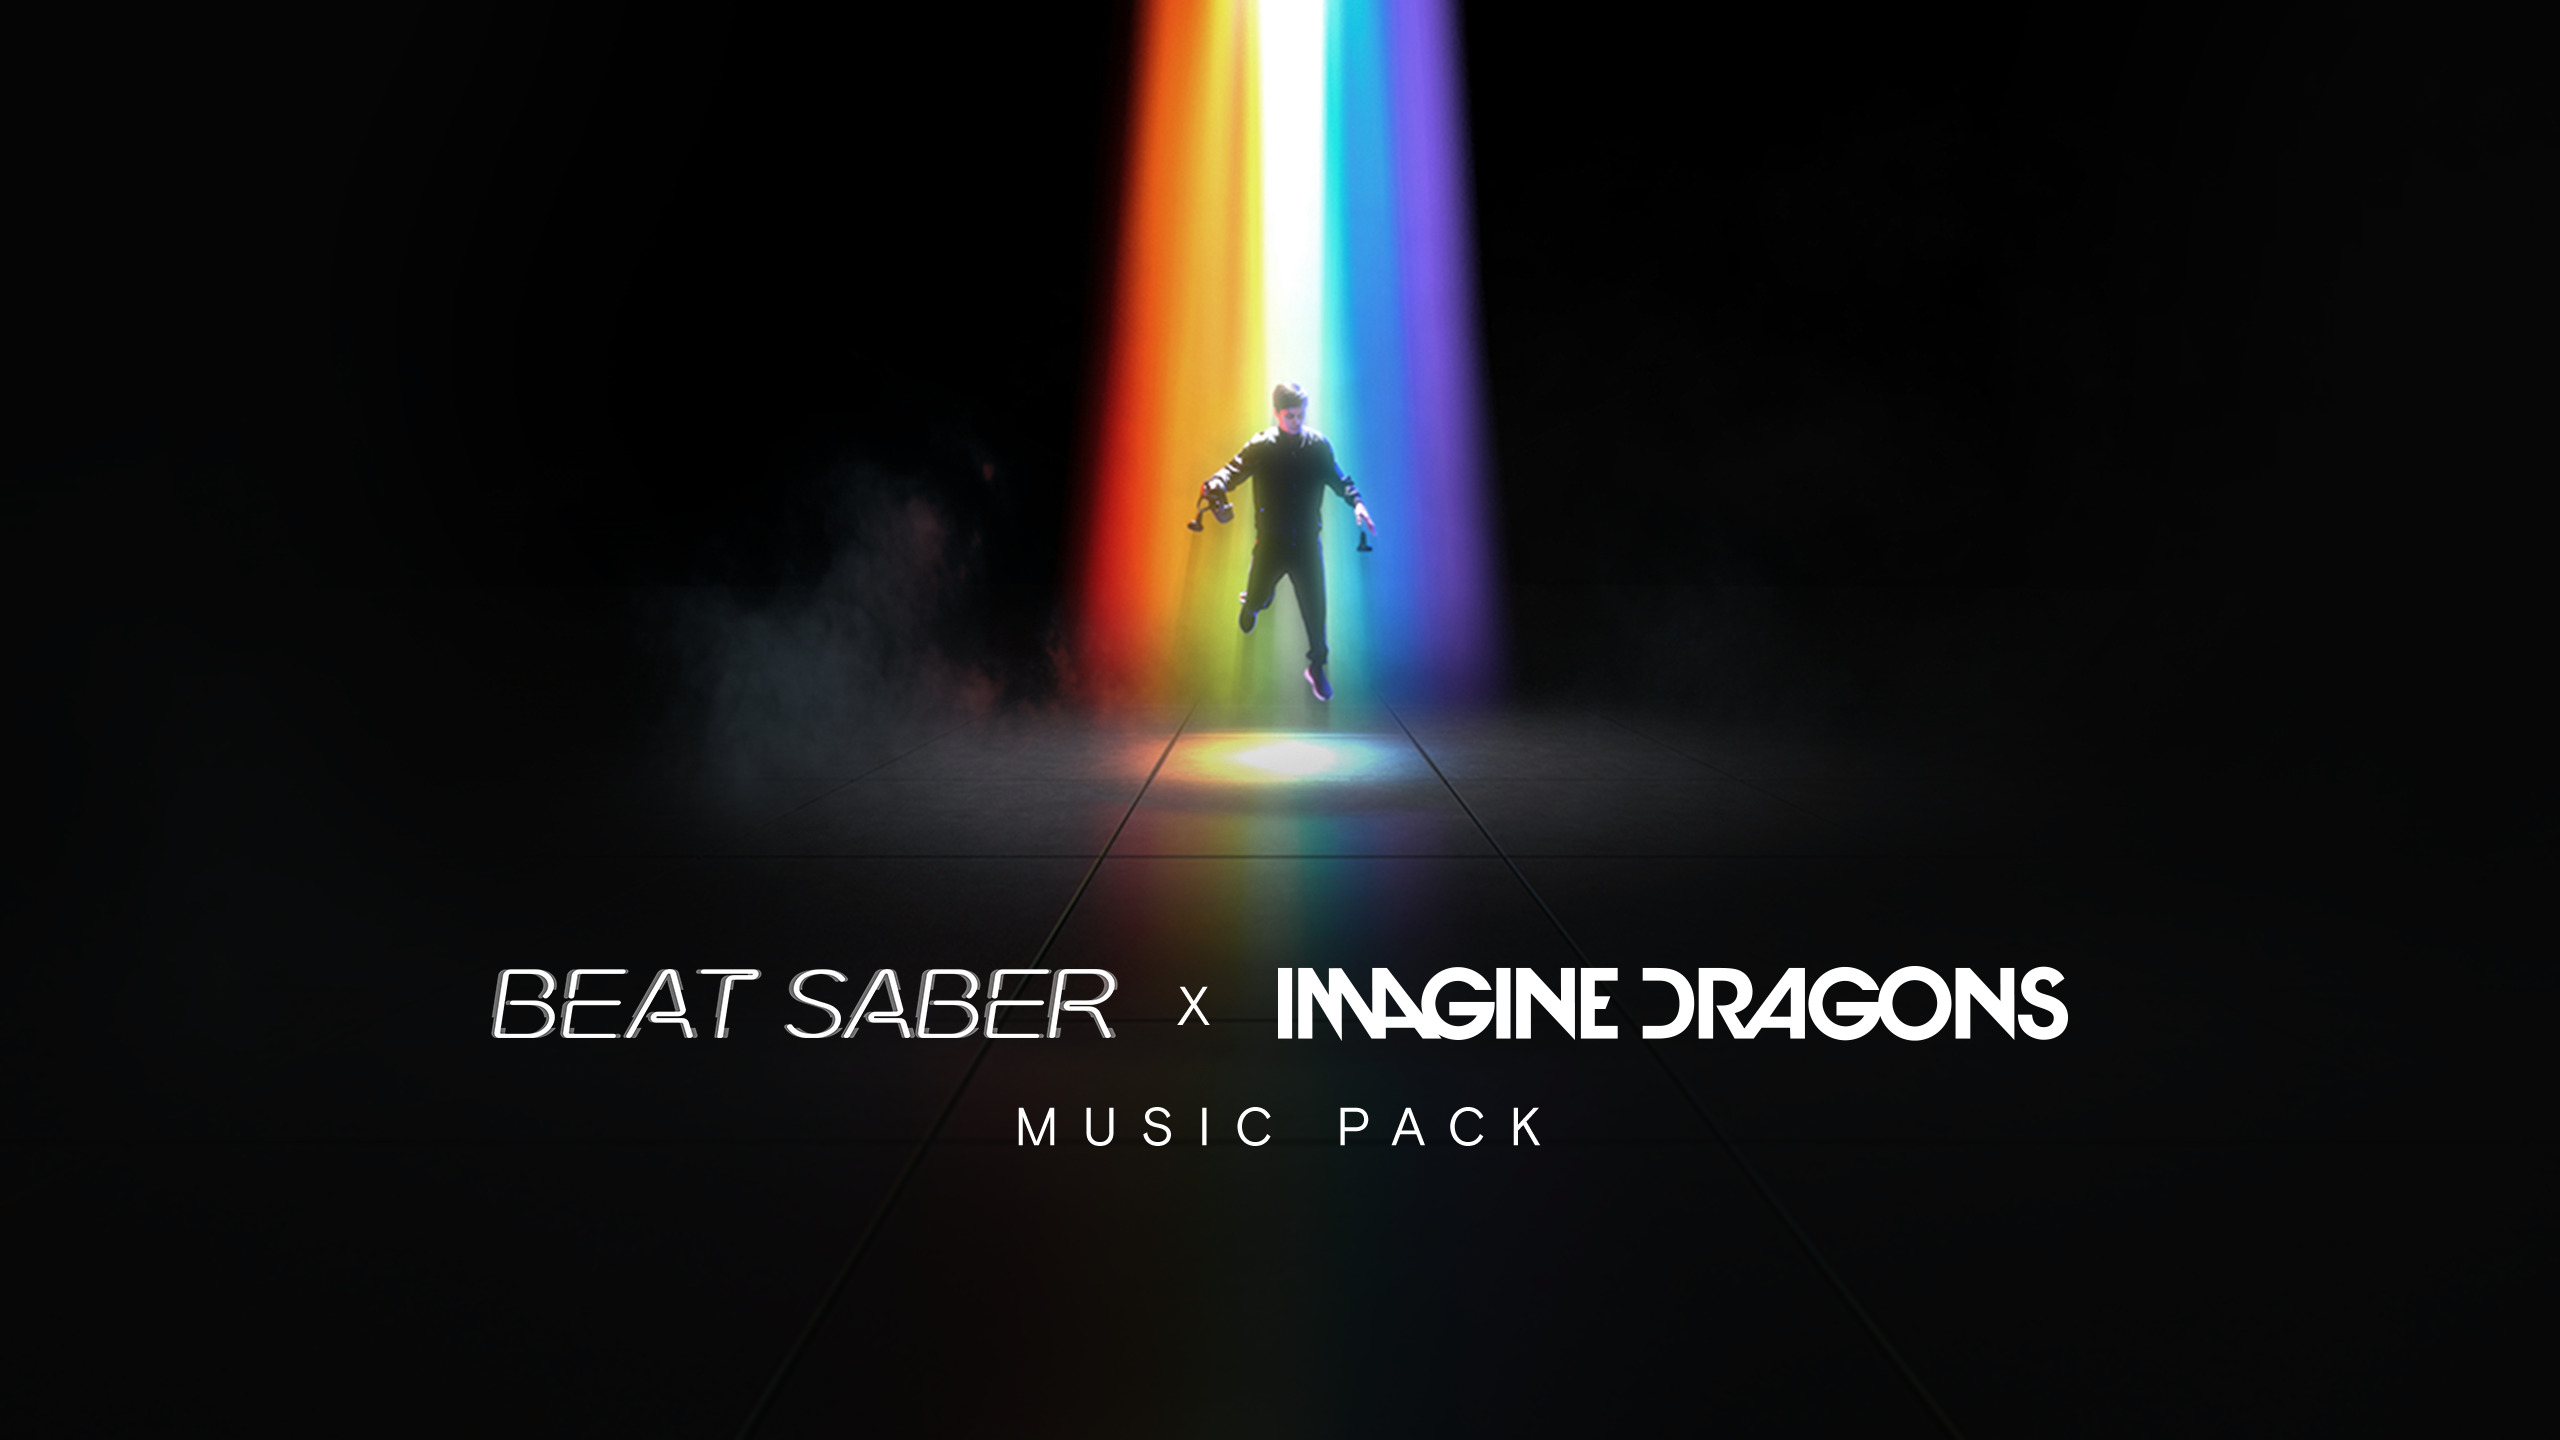 Imagine x Beat Saber: The Collaboration We Needed - VRGear.com